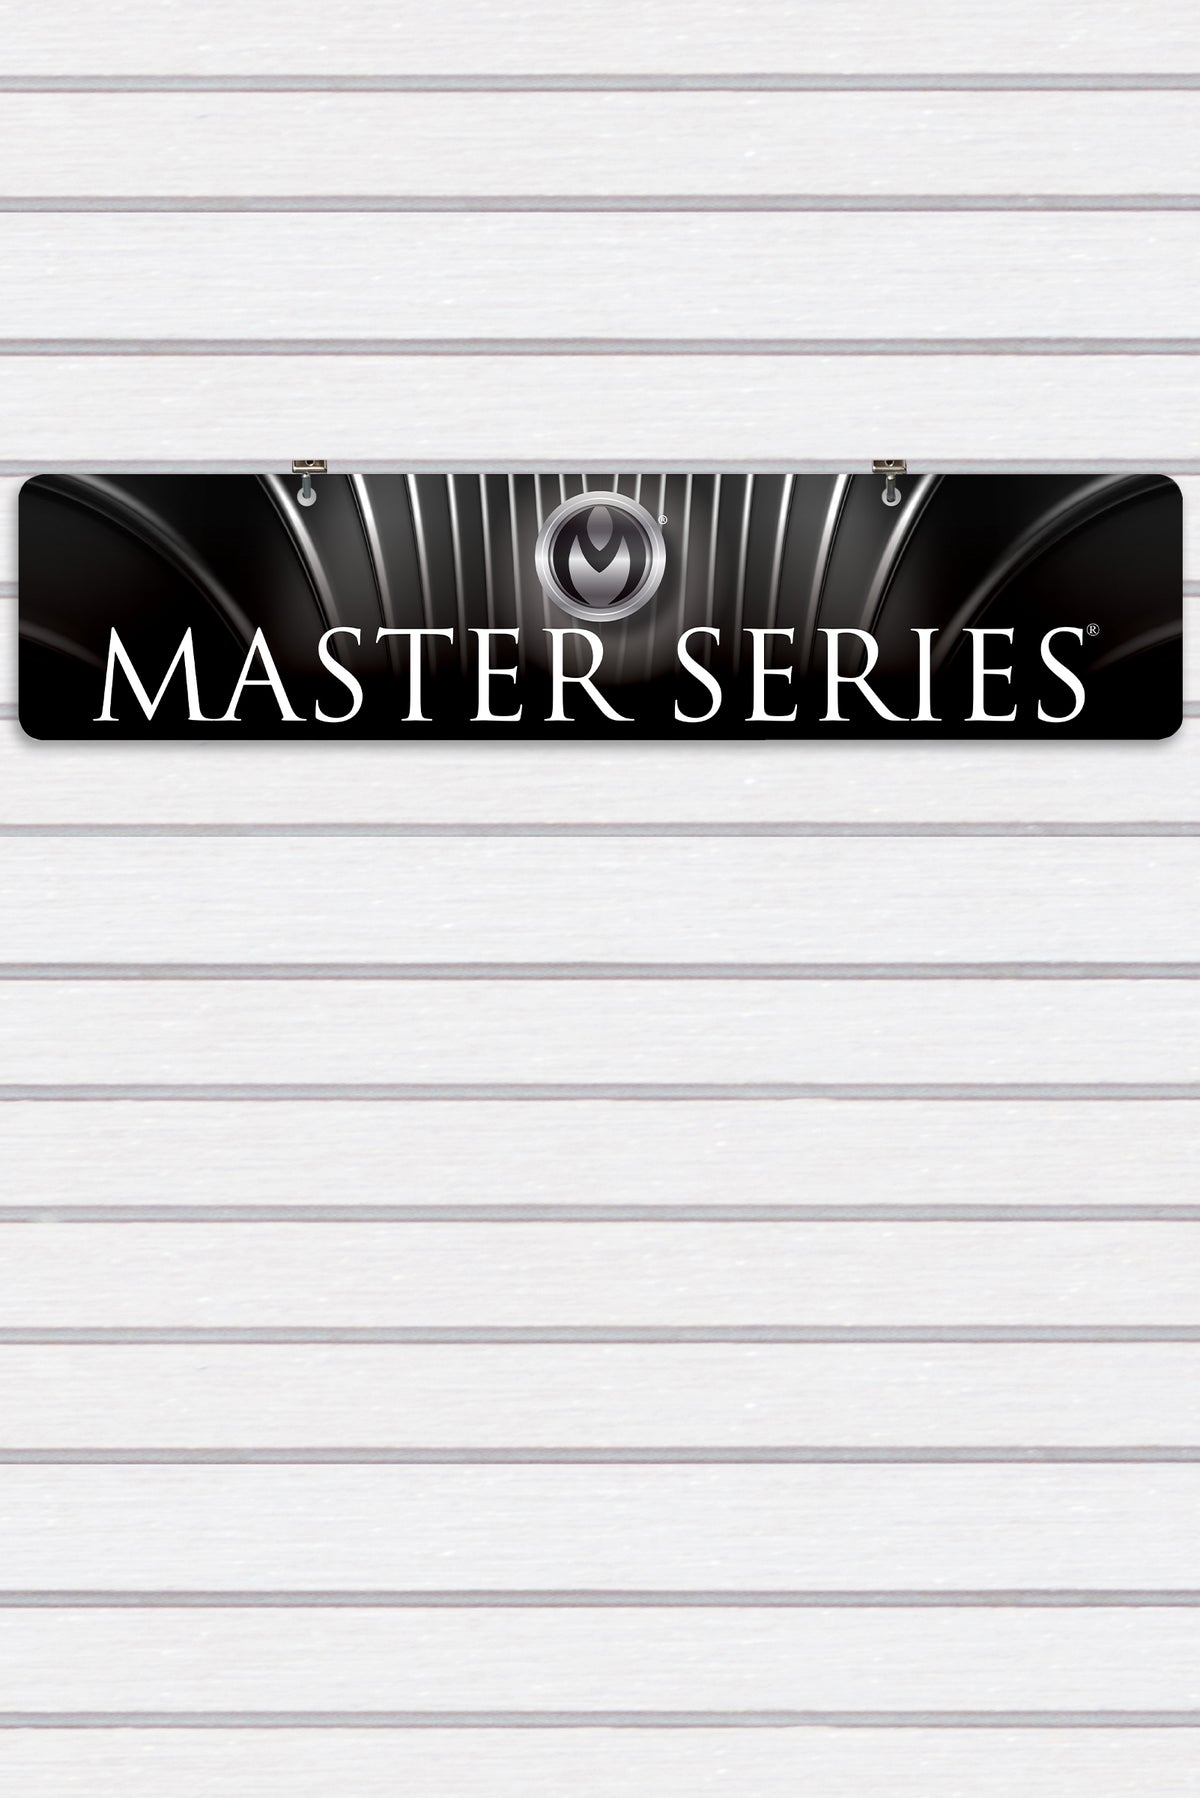 Master Series Display Sign